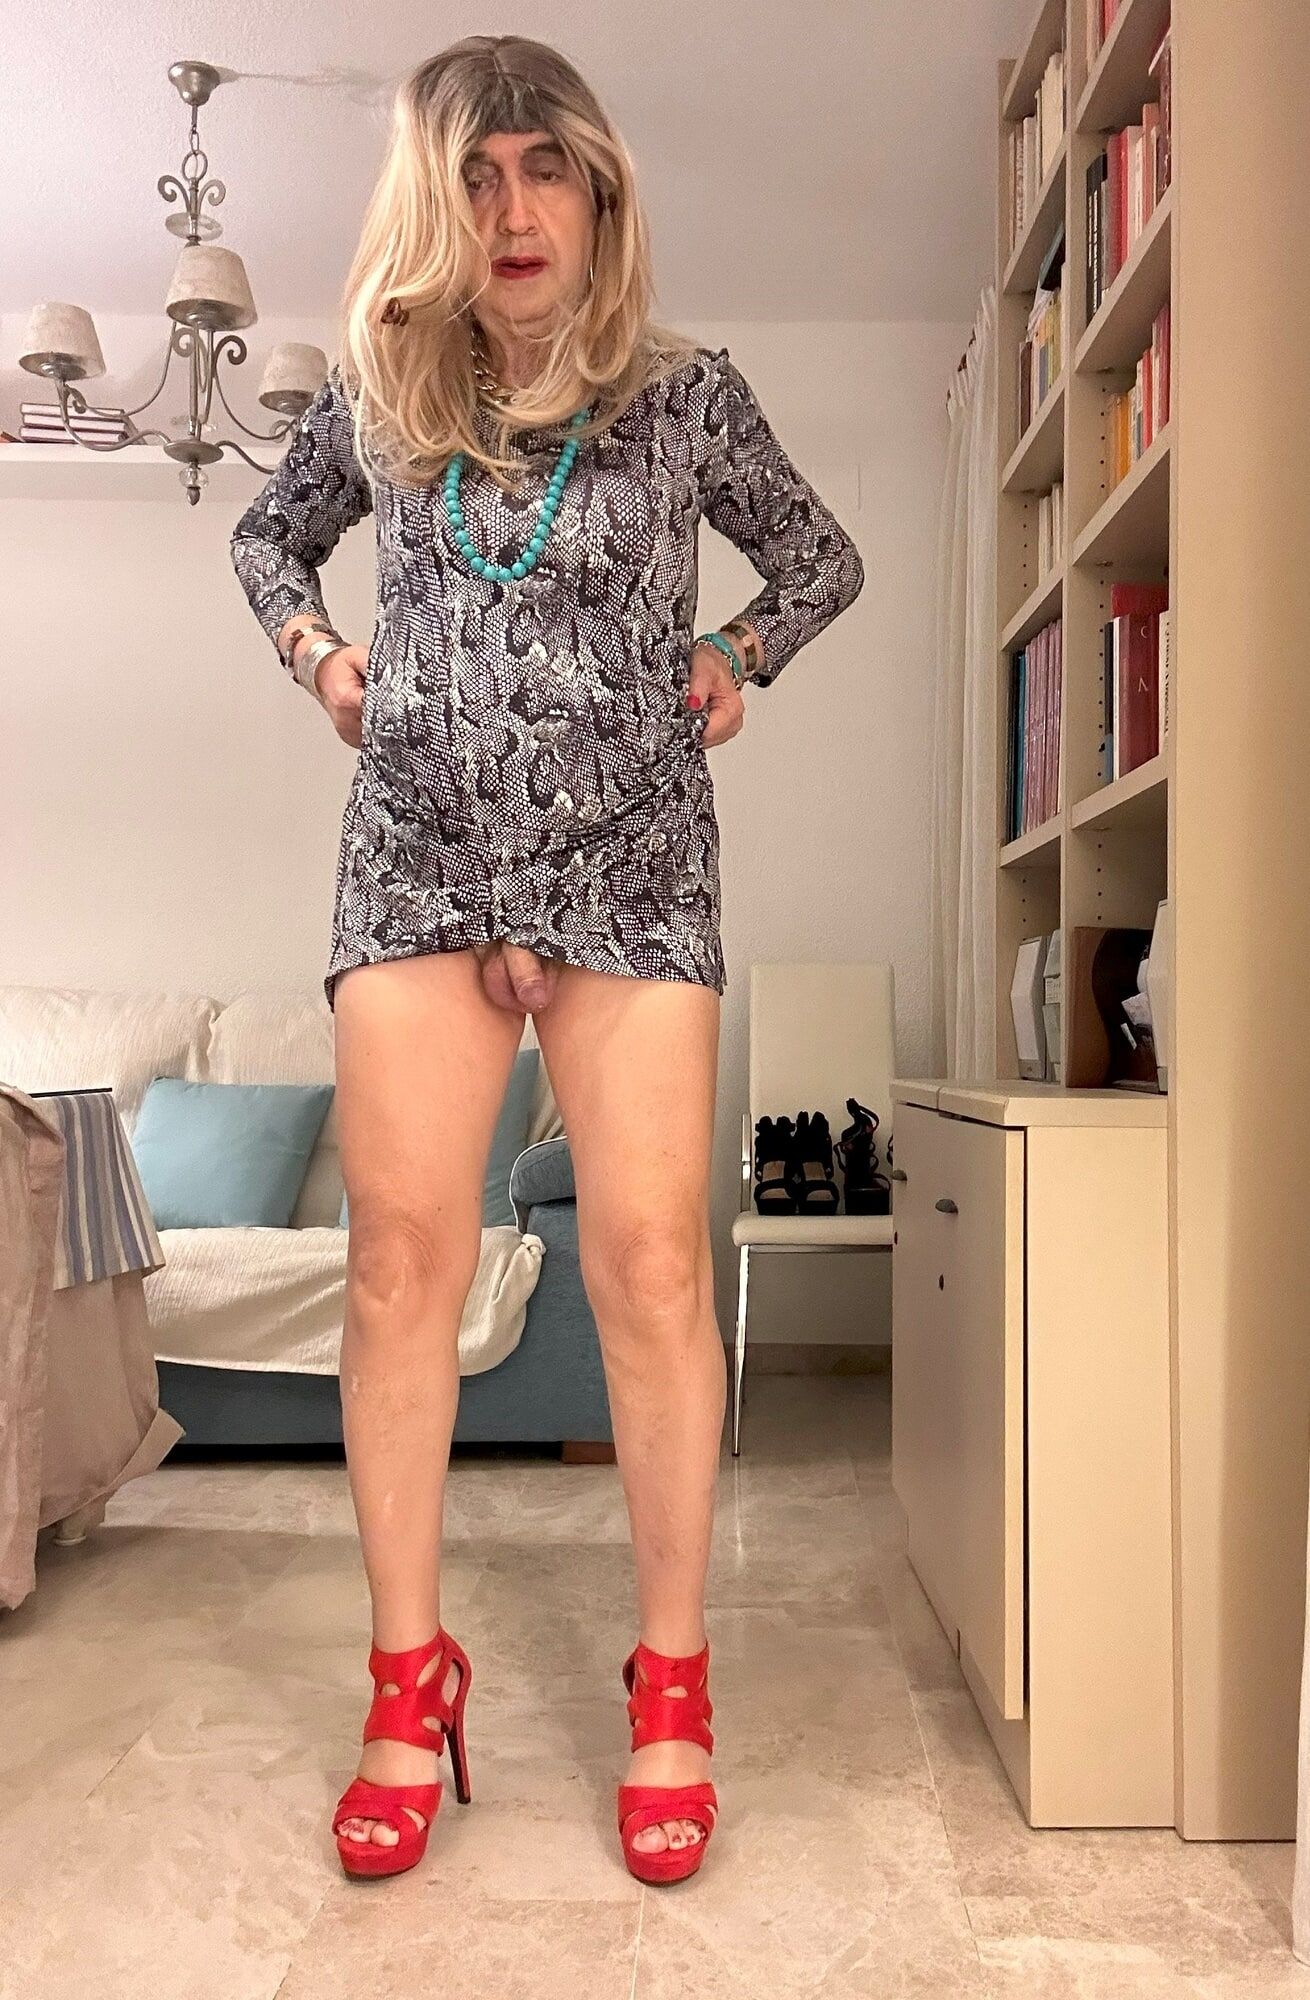 Daniela Monroe Spanish TV, snake dress, red high heels #8